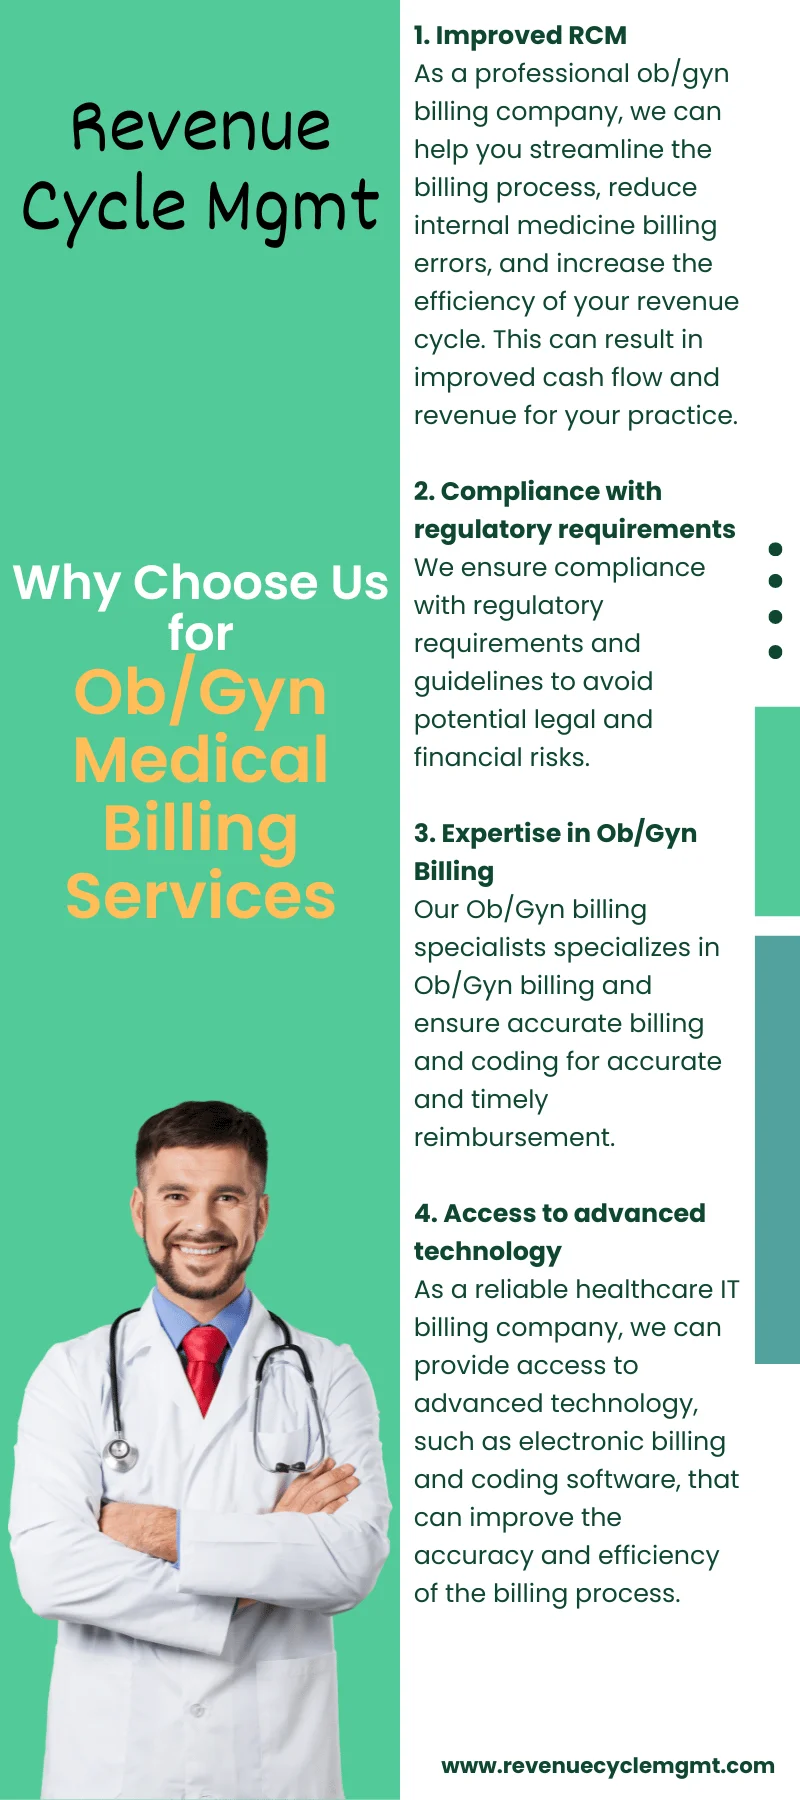 Why Choose Us for OB/GYN Medical Billing Services